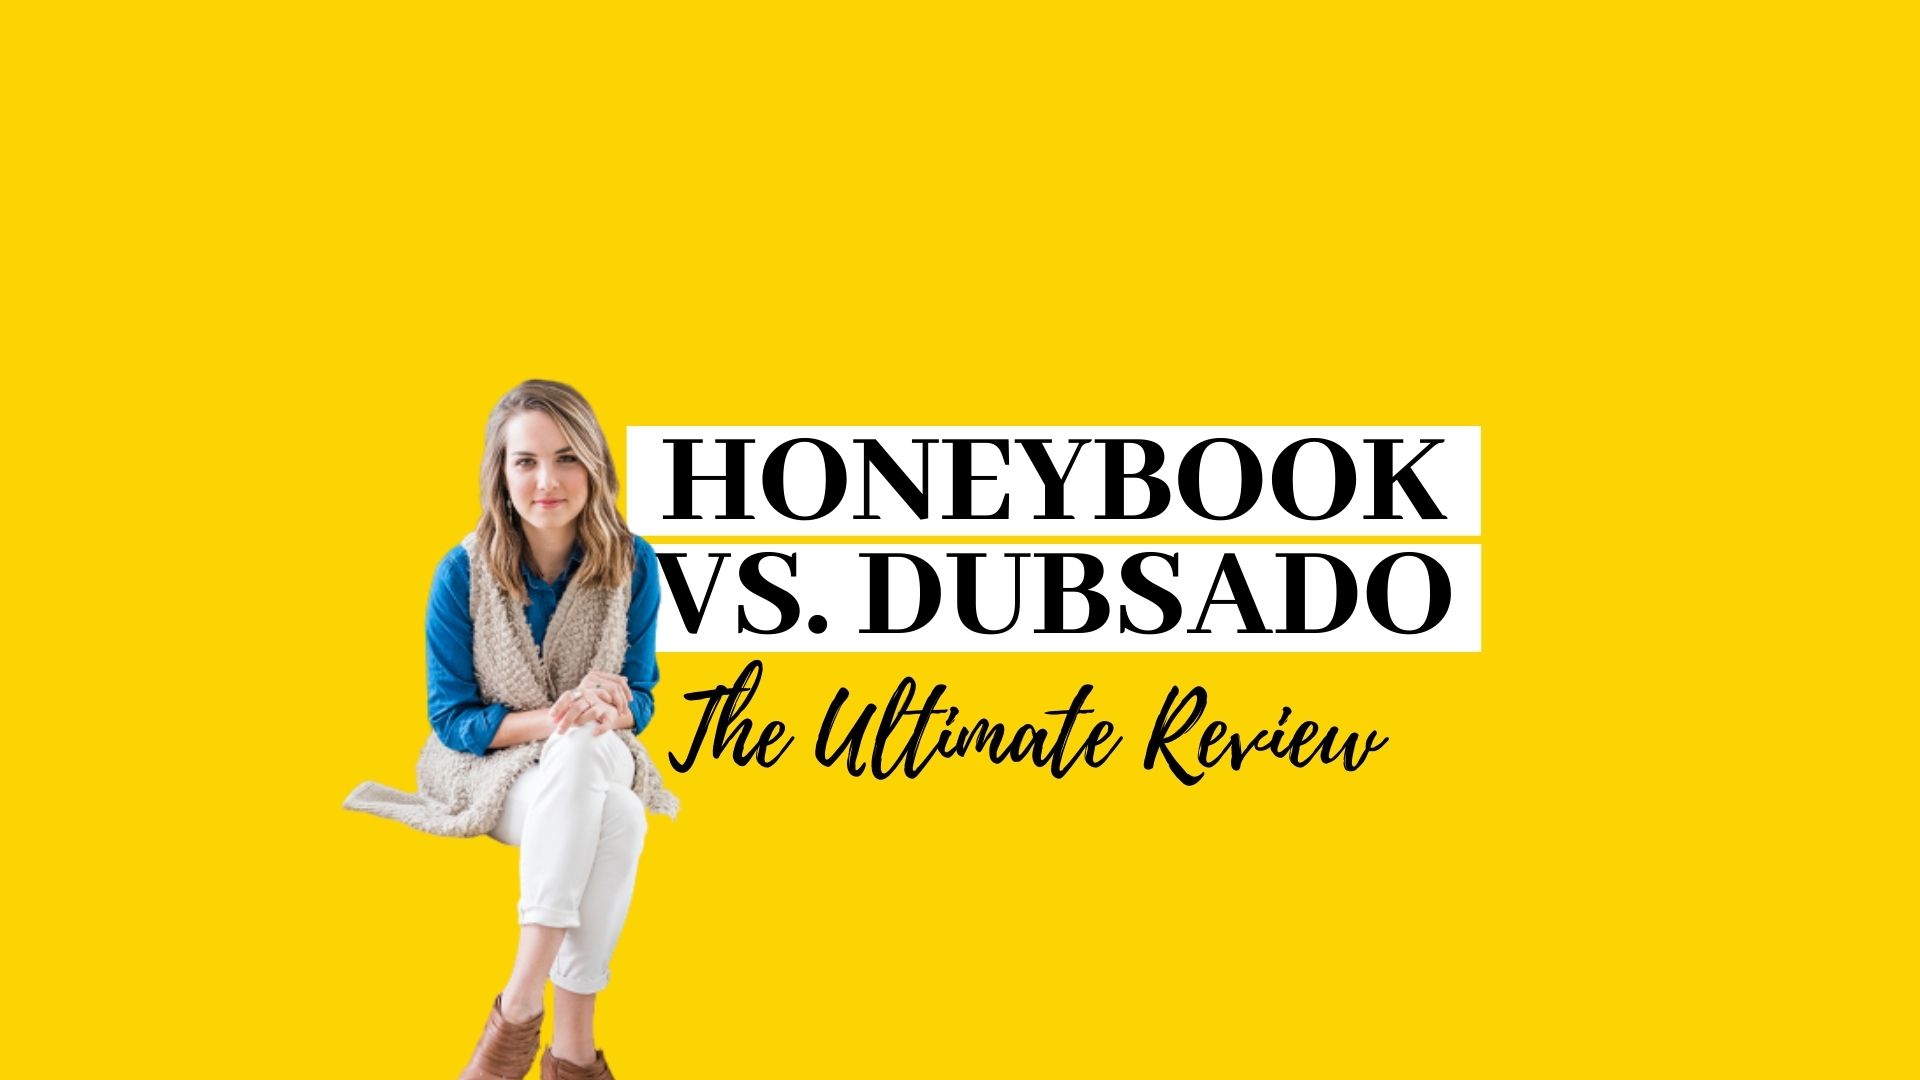 Honeybook vs. Dubsado The Ultimate Review